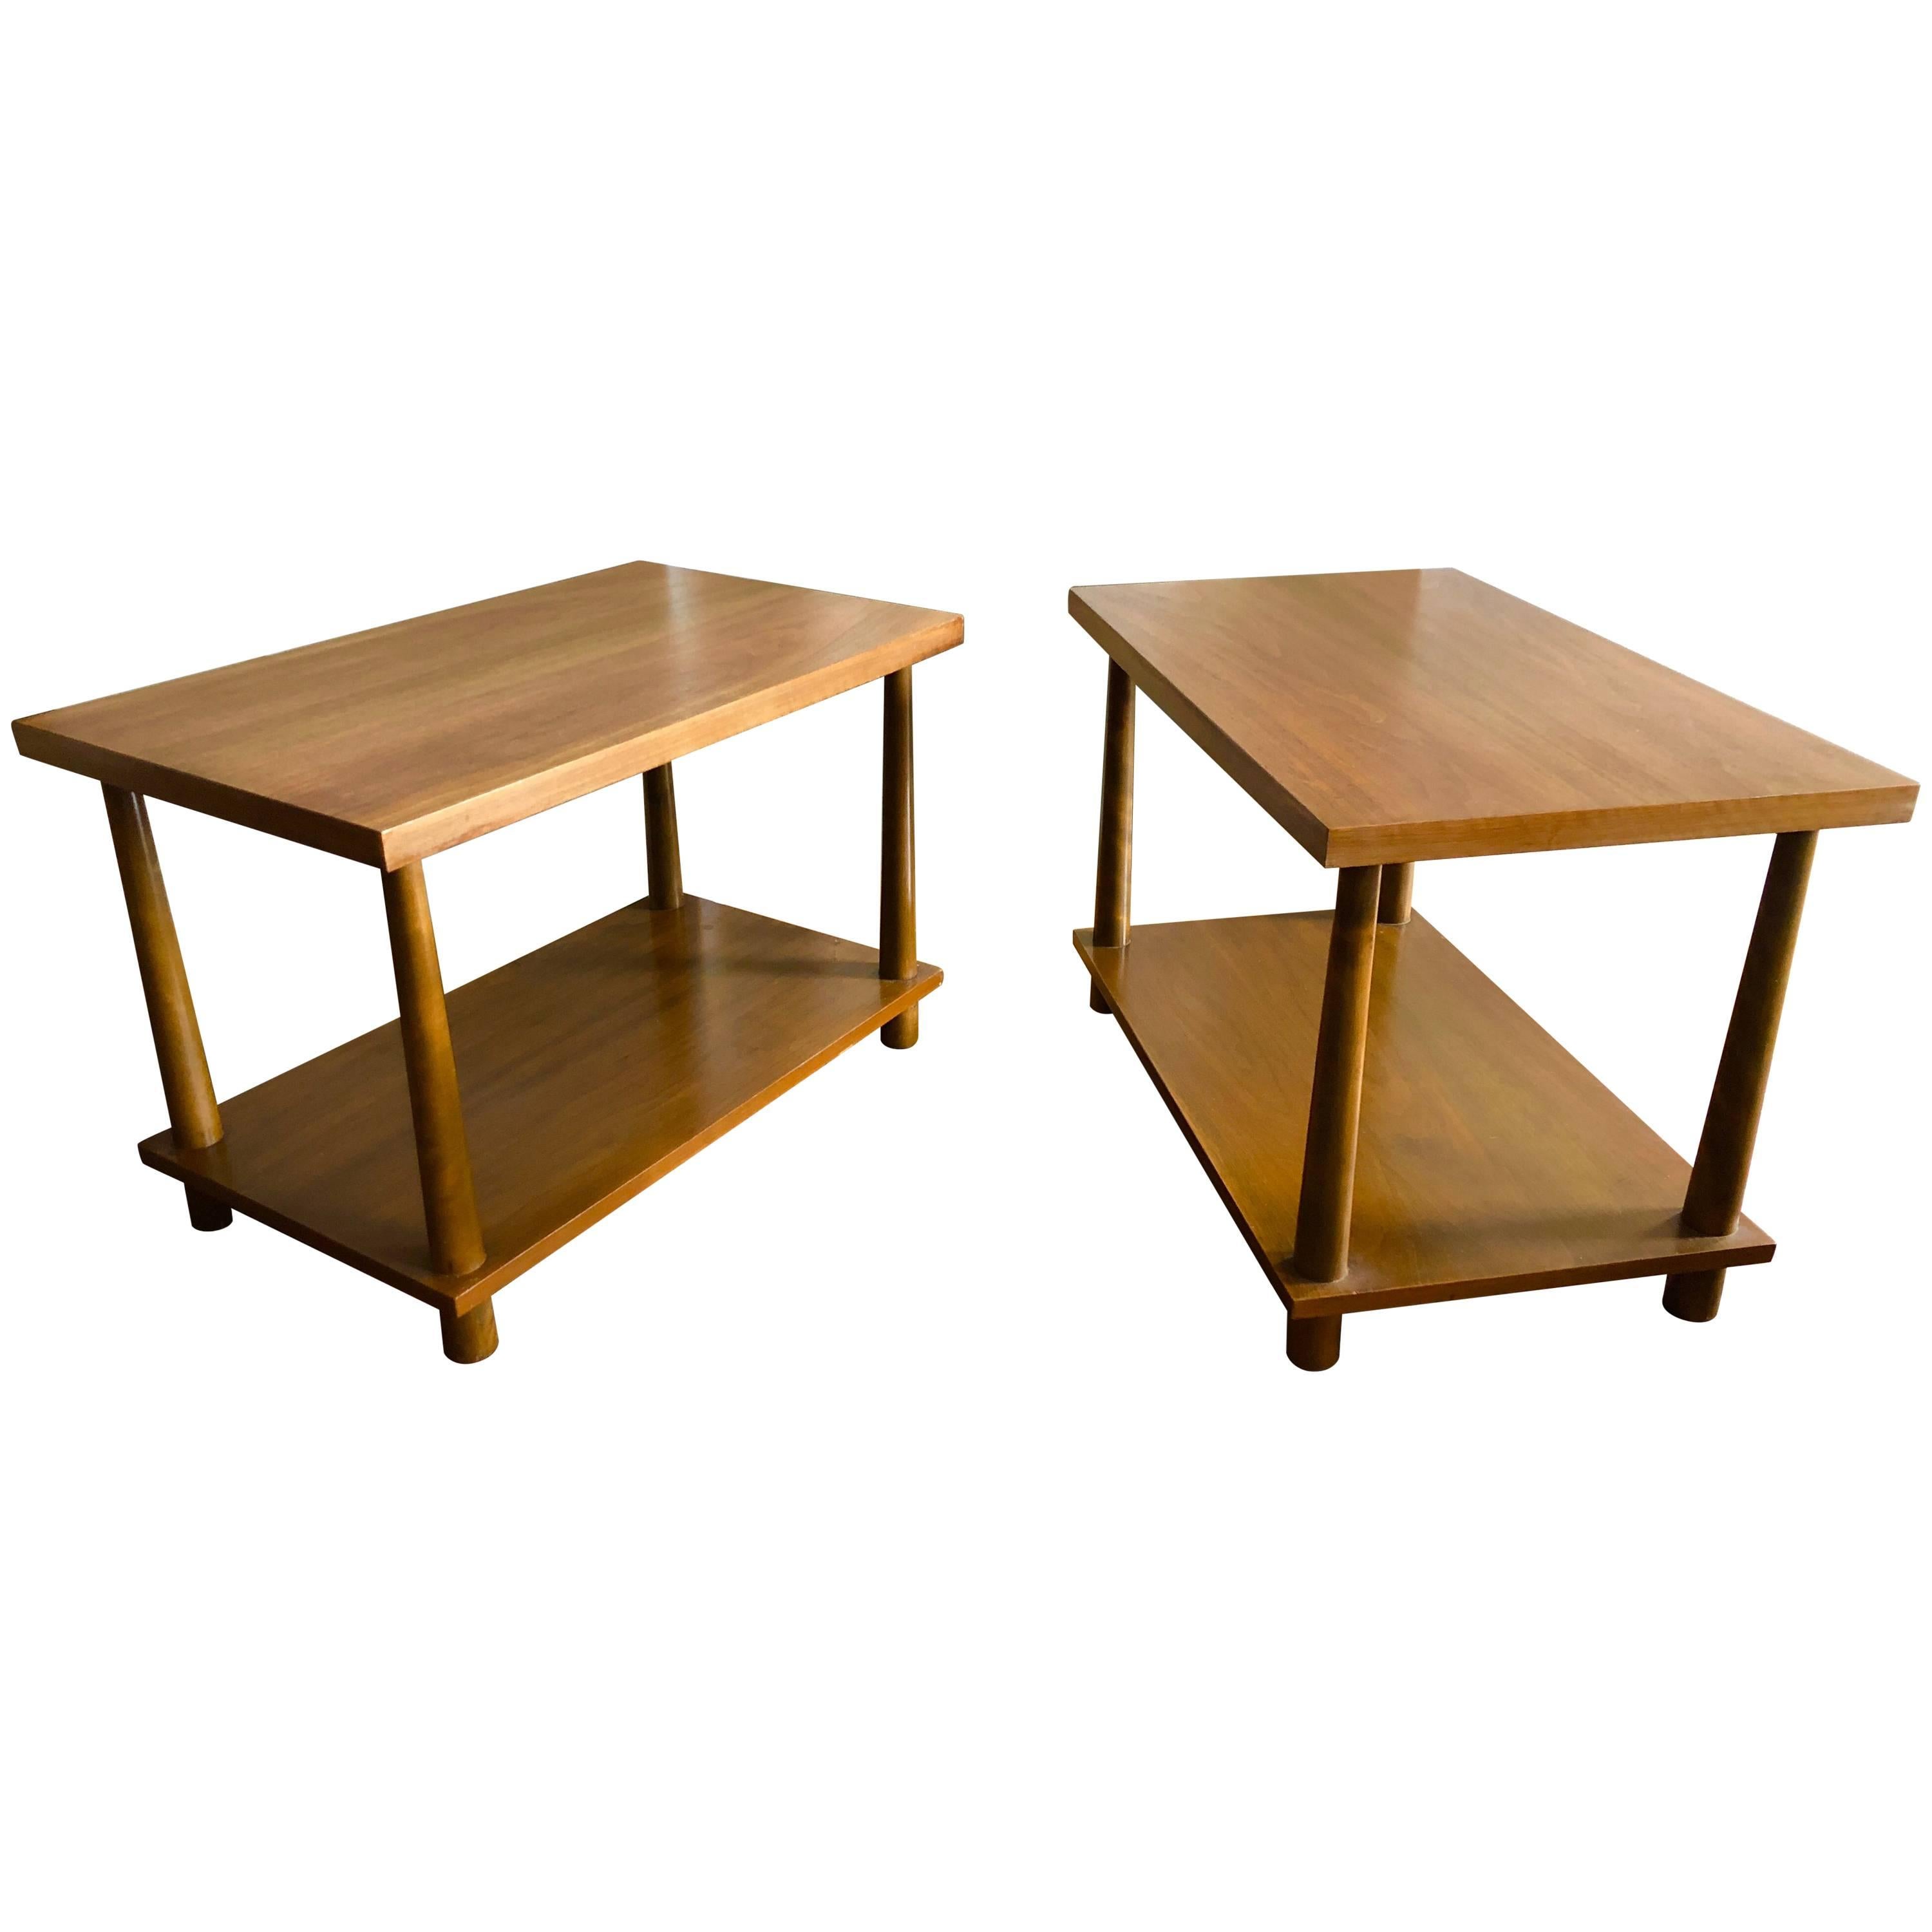 Pair of Walnut End Tables by T.H. Robsjohn-Gibbings